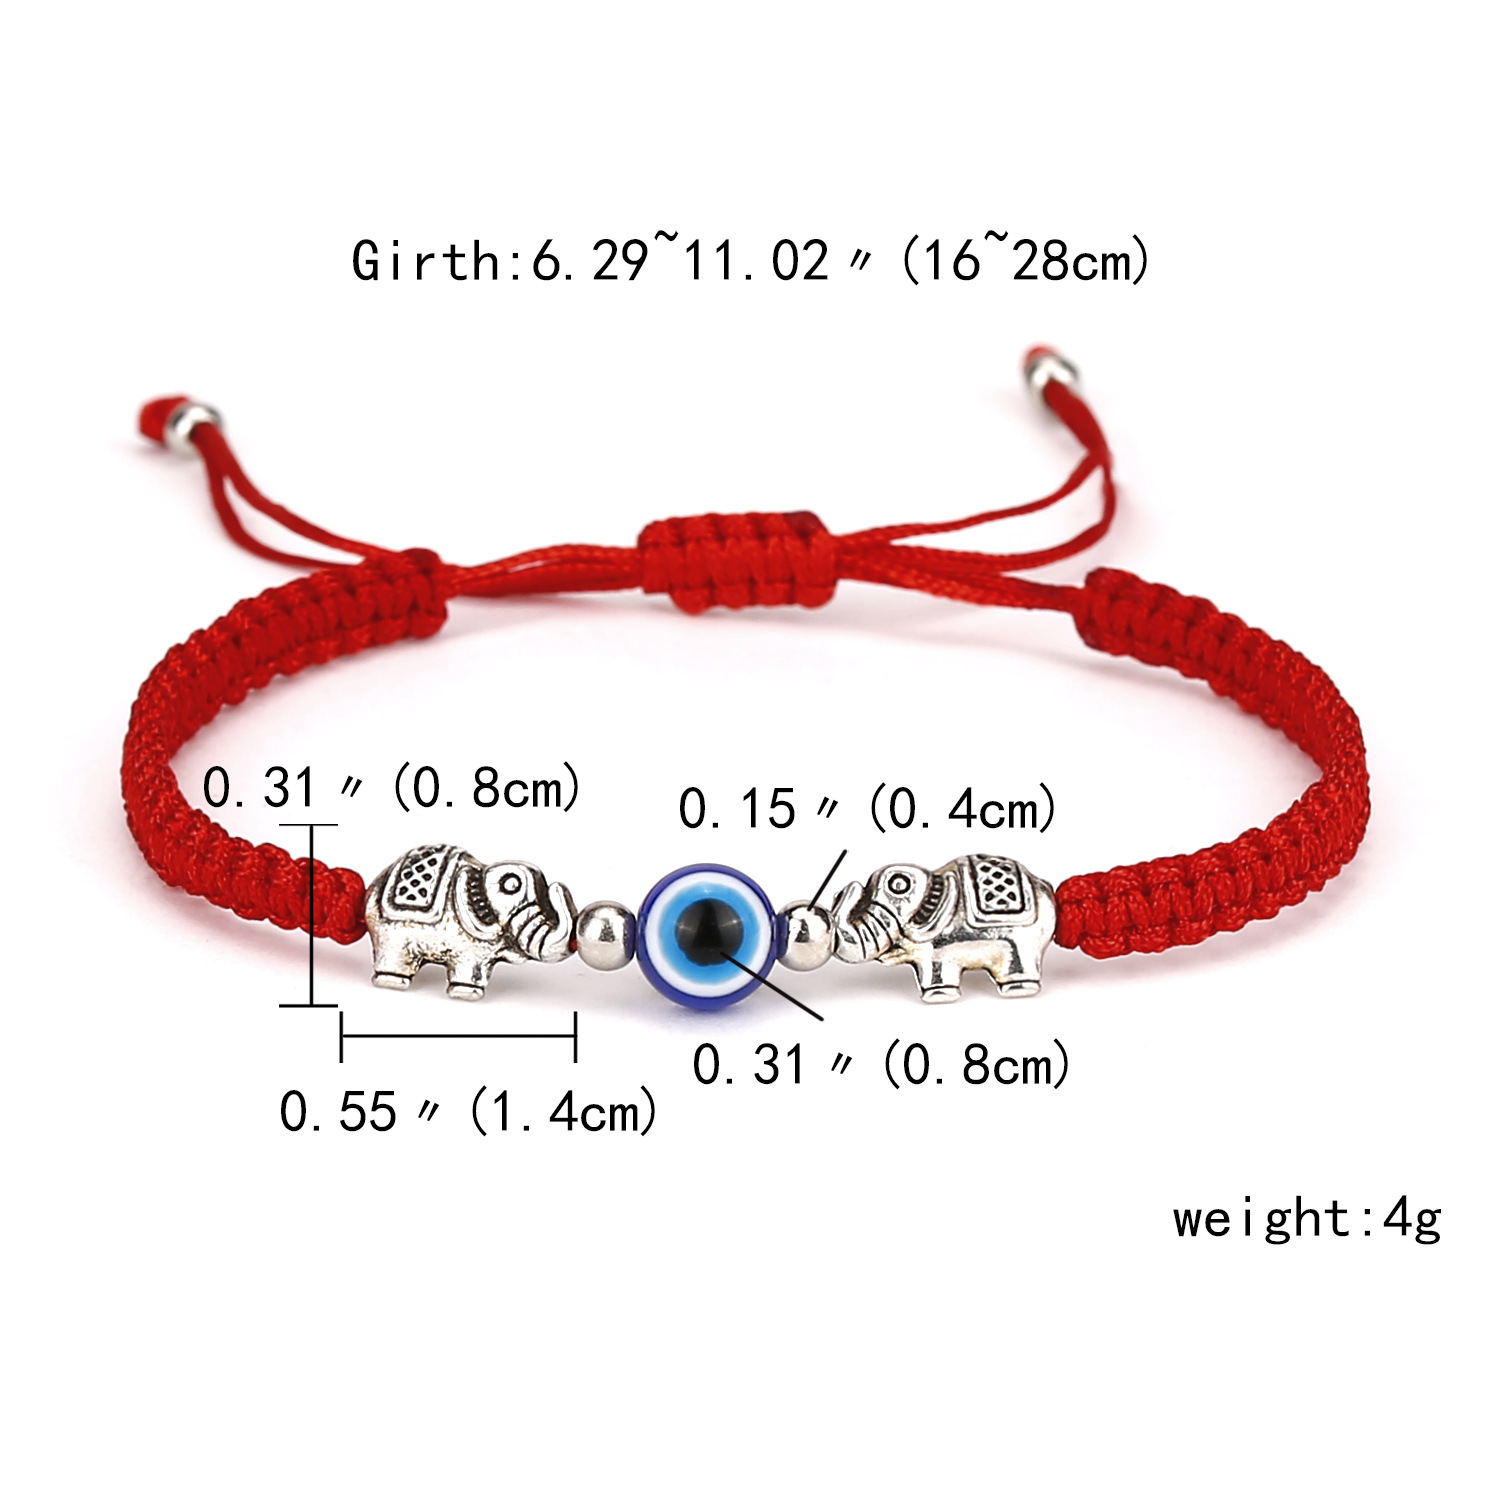 Fashion adjustable bracelet creative new blue eye bracelet evil eye red rope braided braceletpicture9